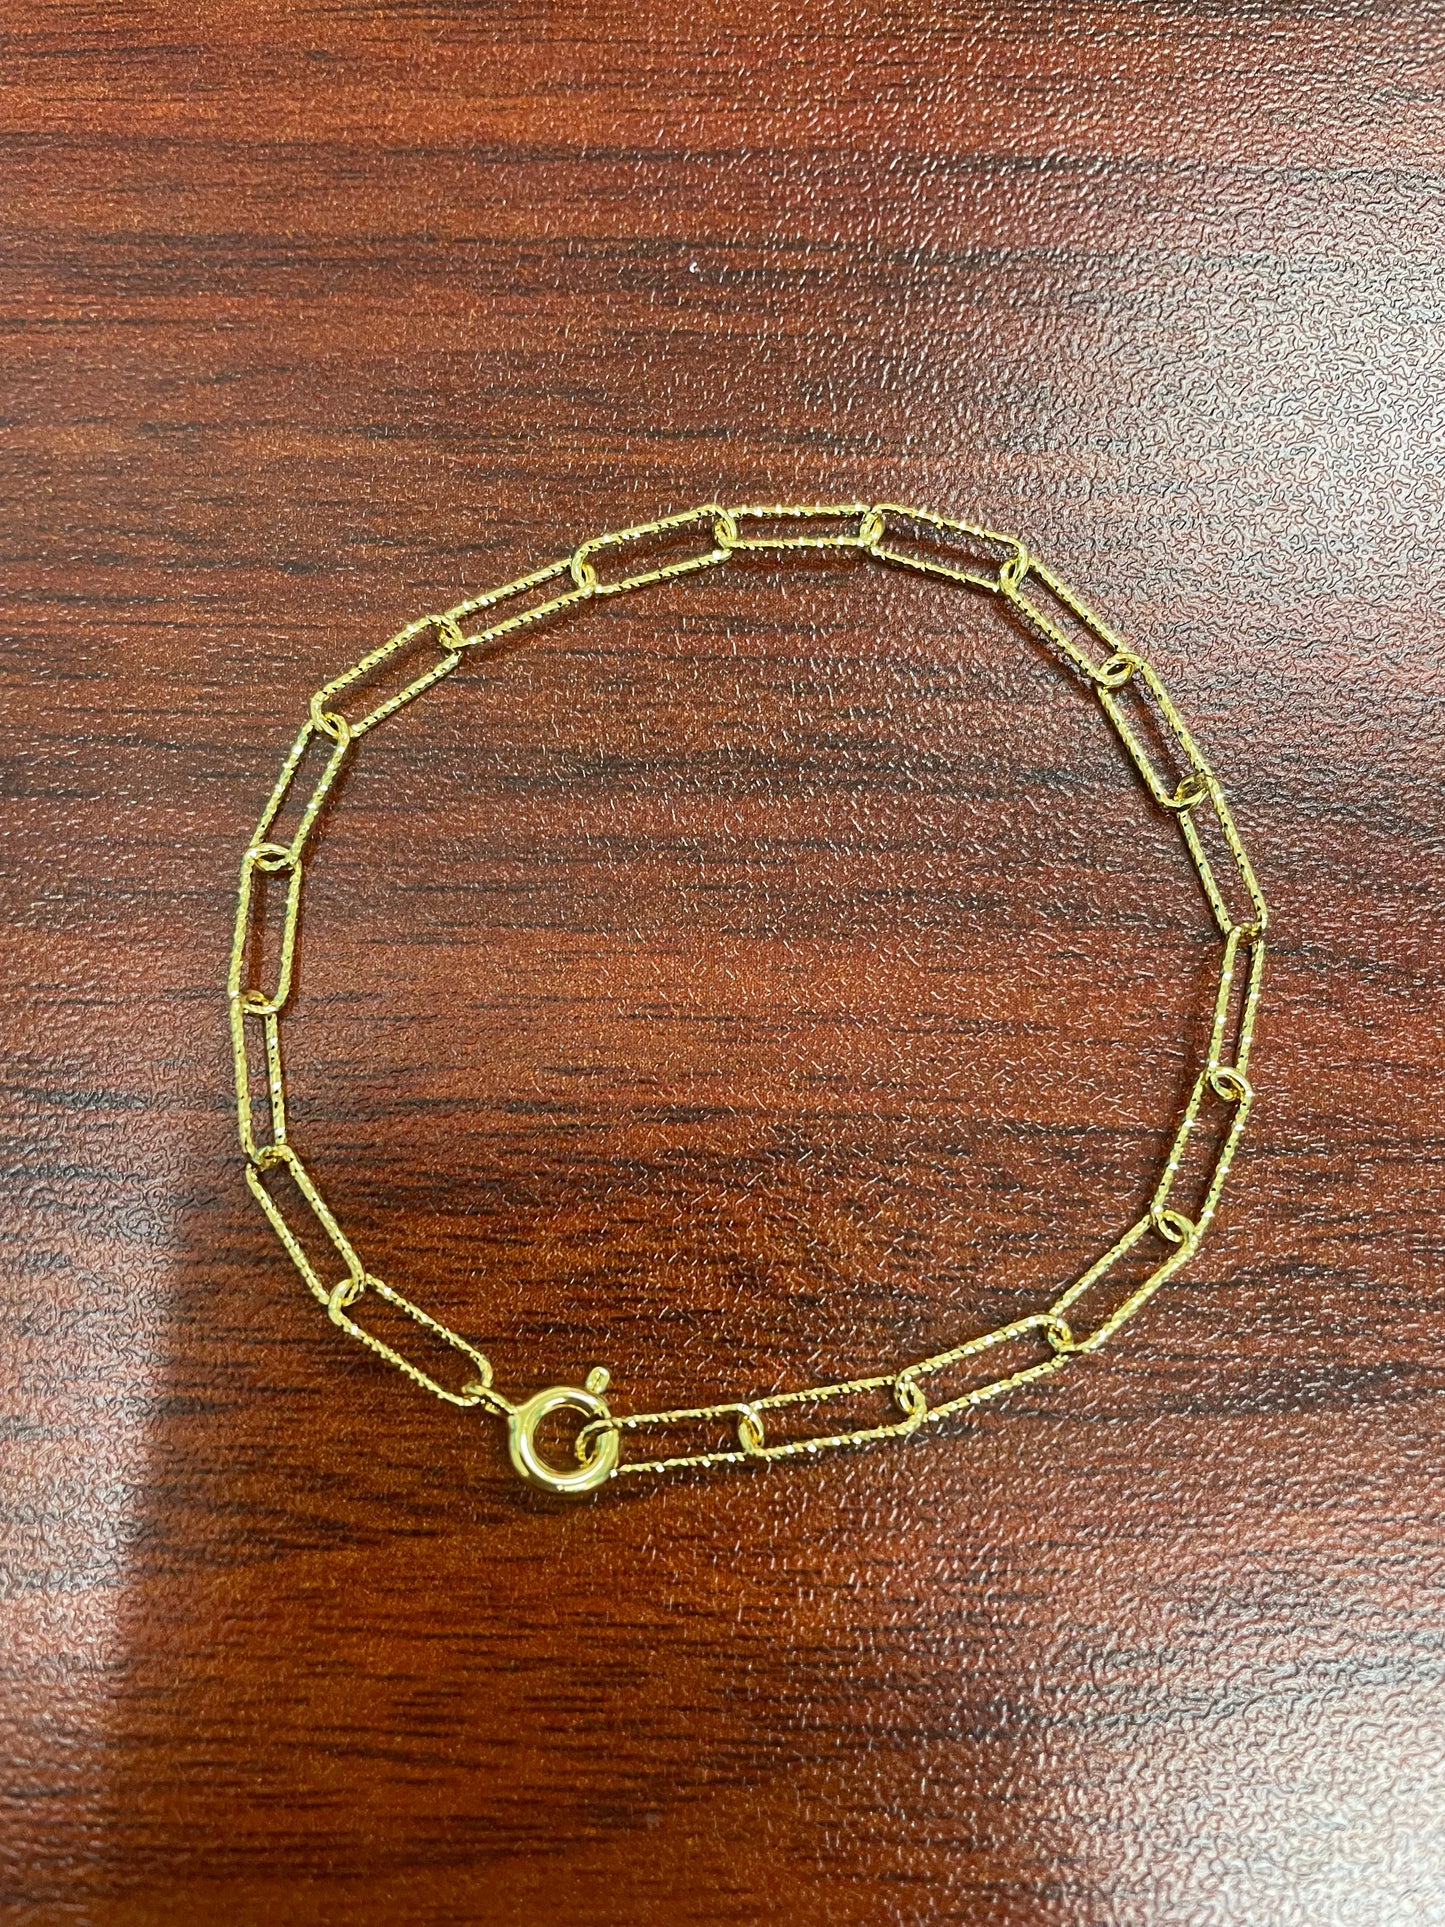 Rada Link bracelet in Gold